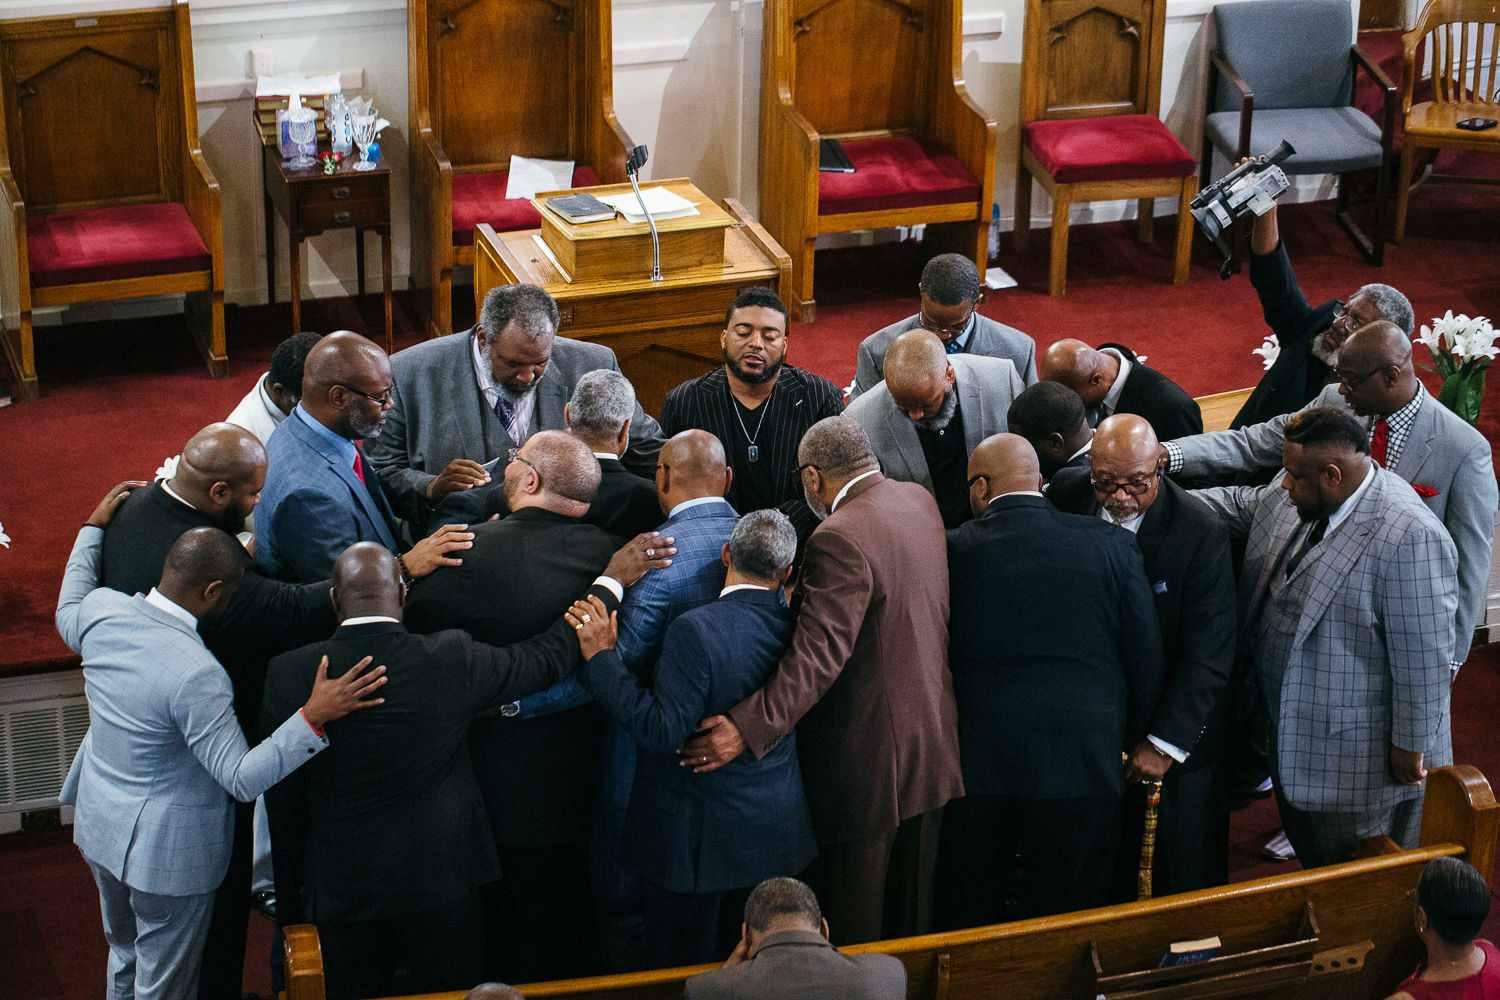 group prayer at church service